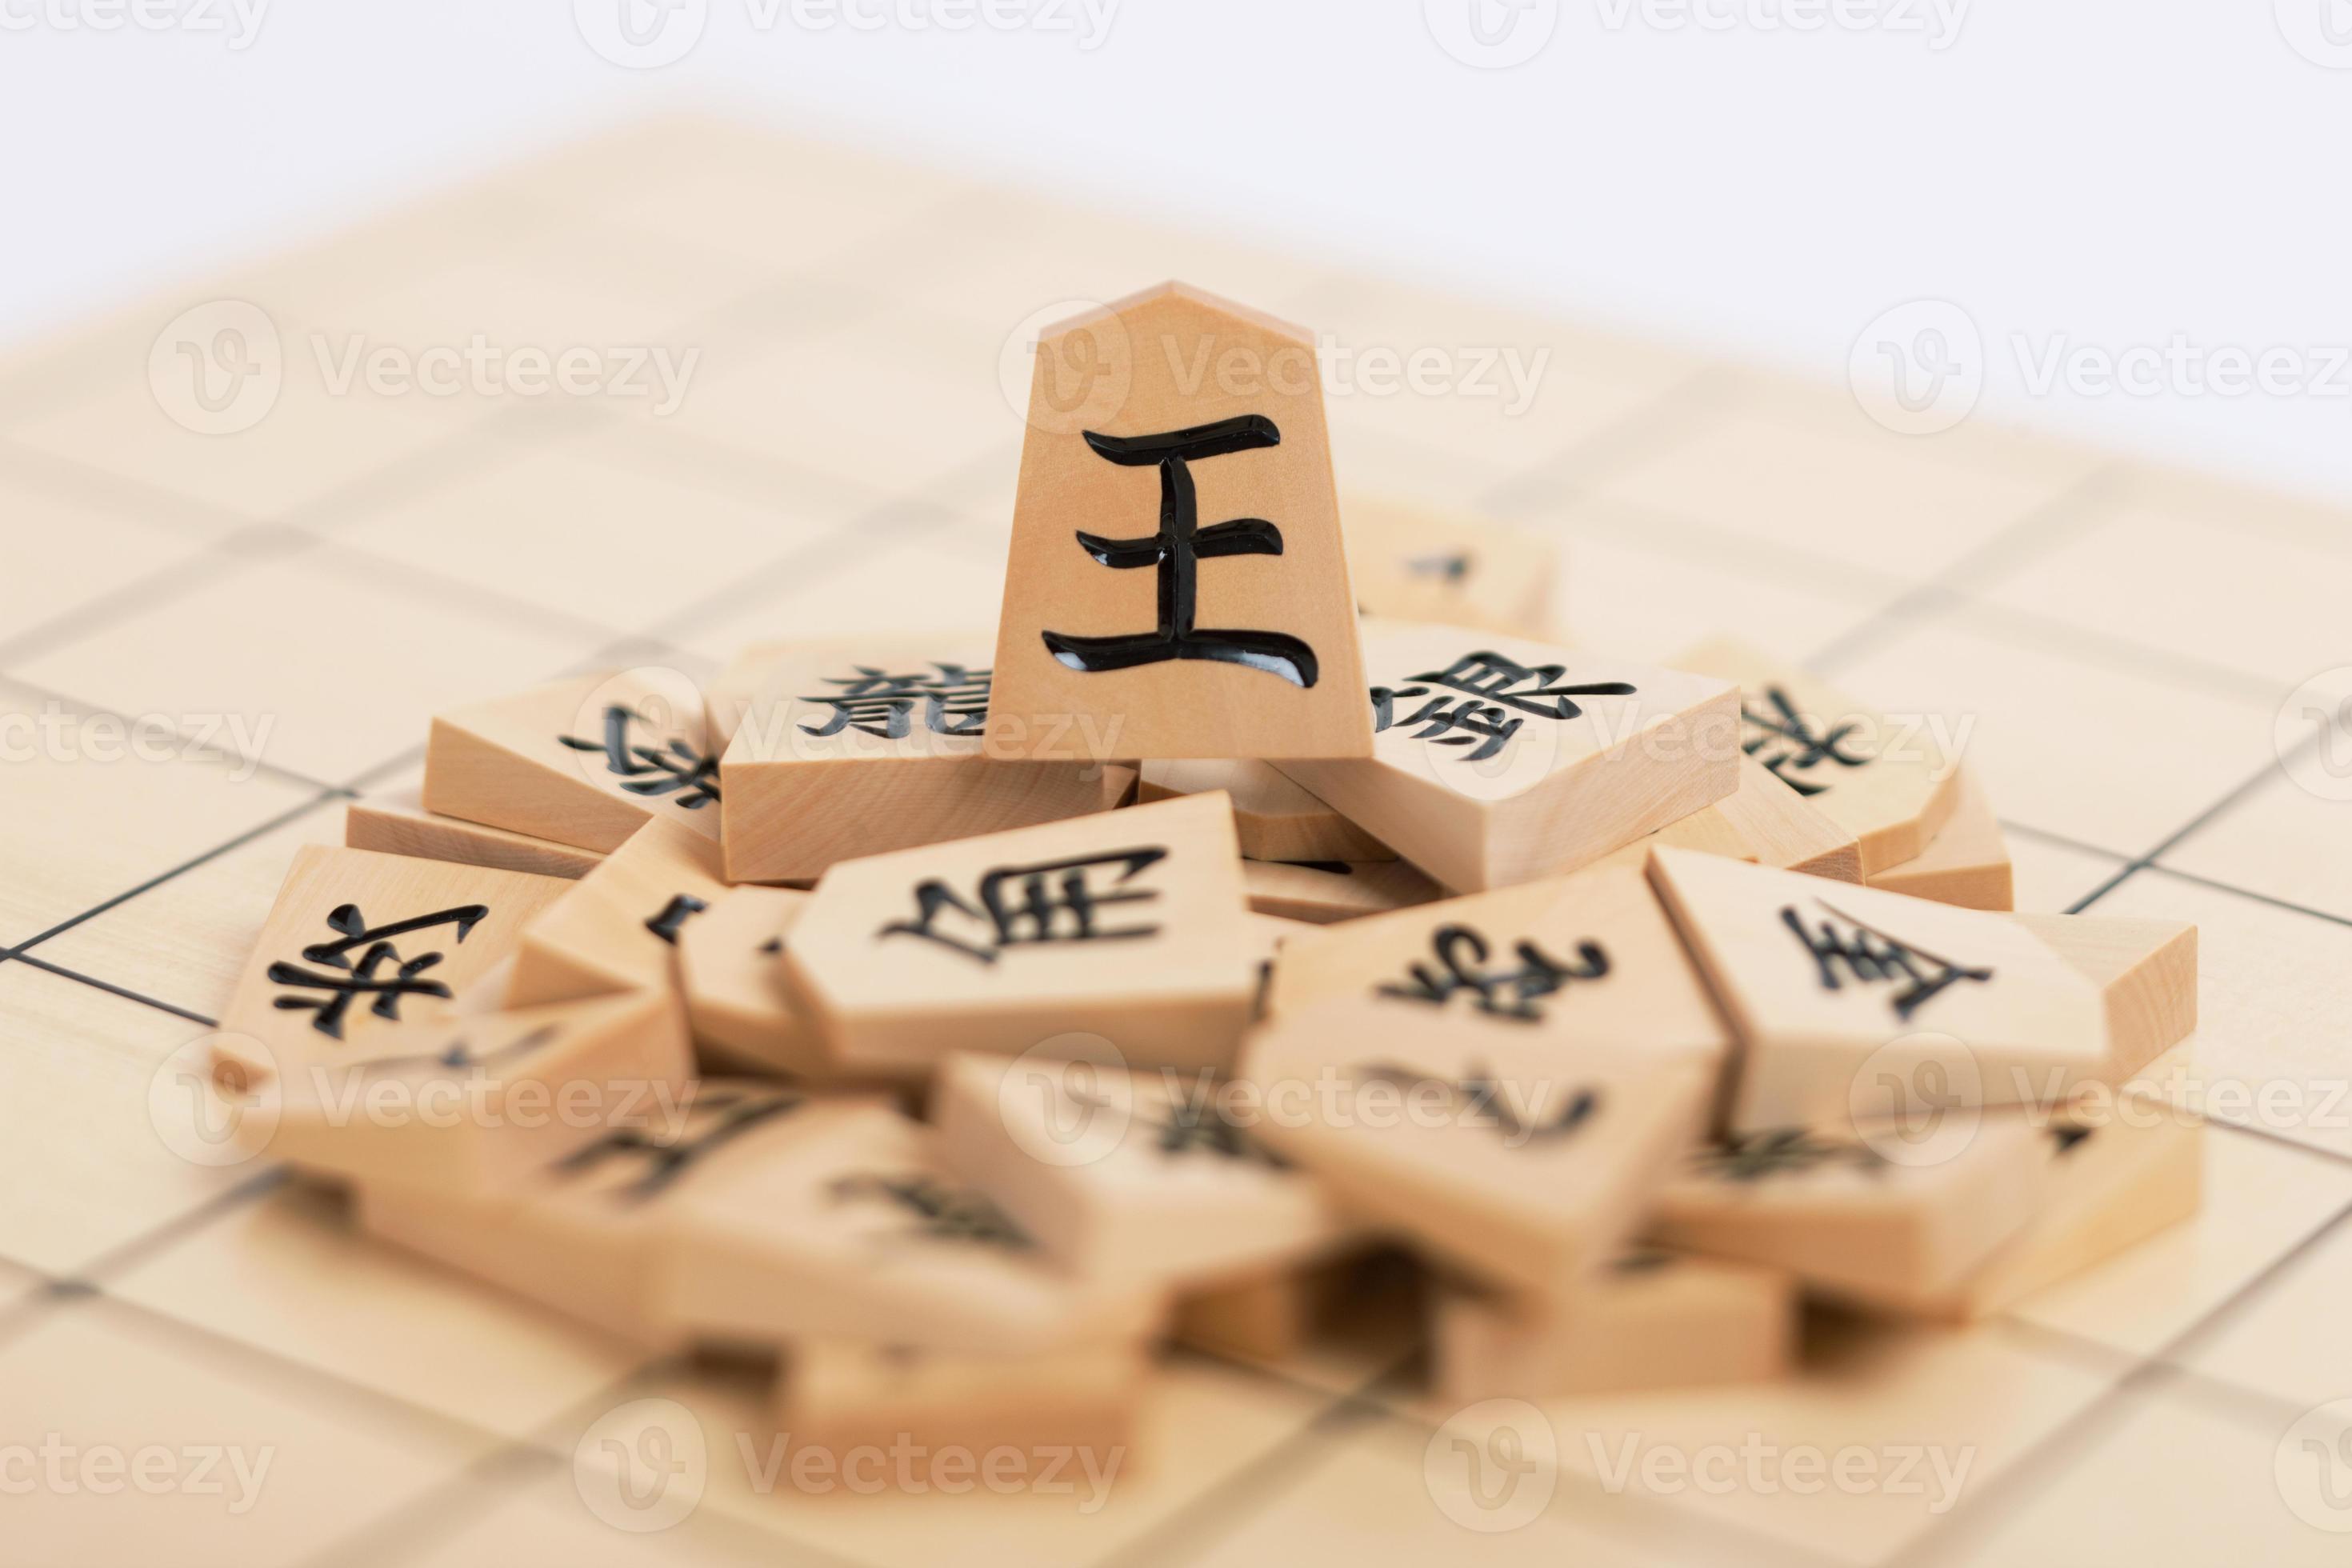 Jogo De Xadrez Japonês (Shogi) Foto de Stock - Imagem de partes